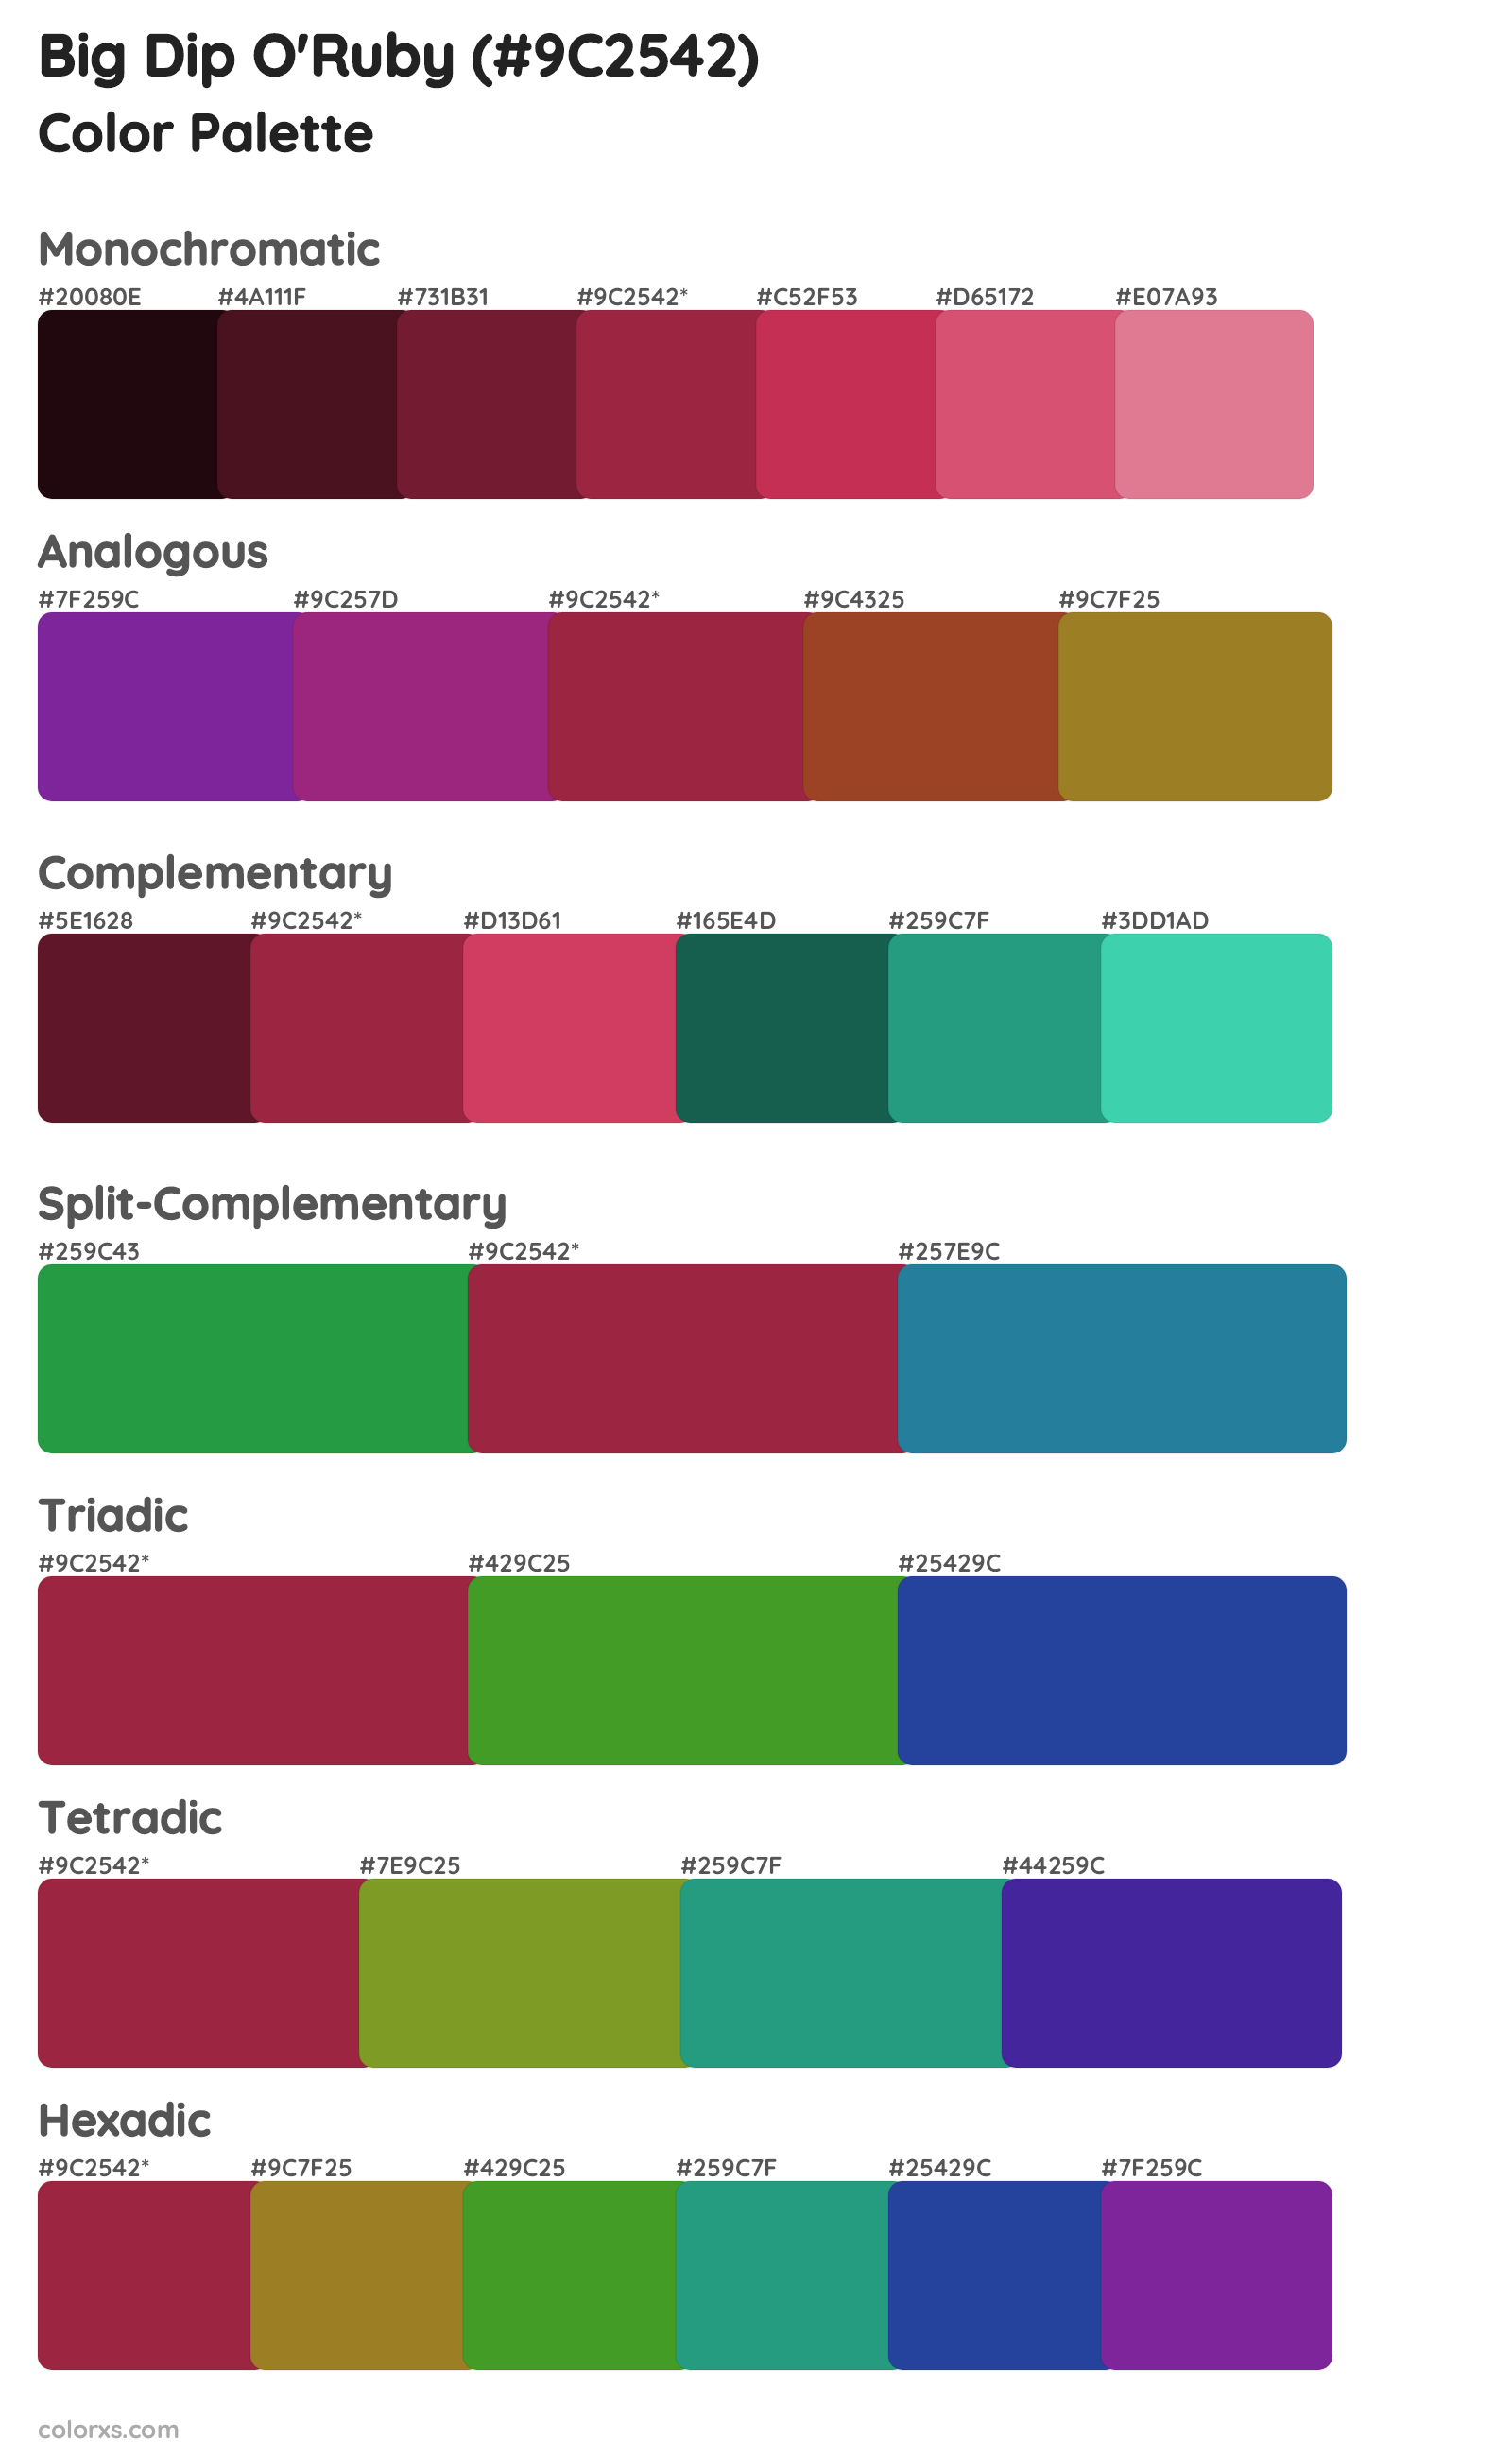 Big Dip O'Ruby Color Scheme Palettes